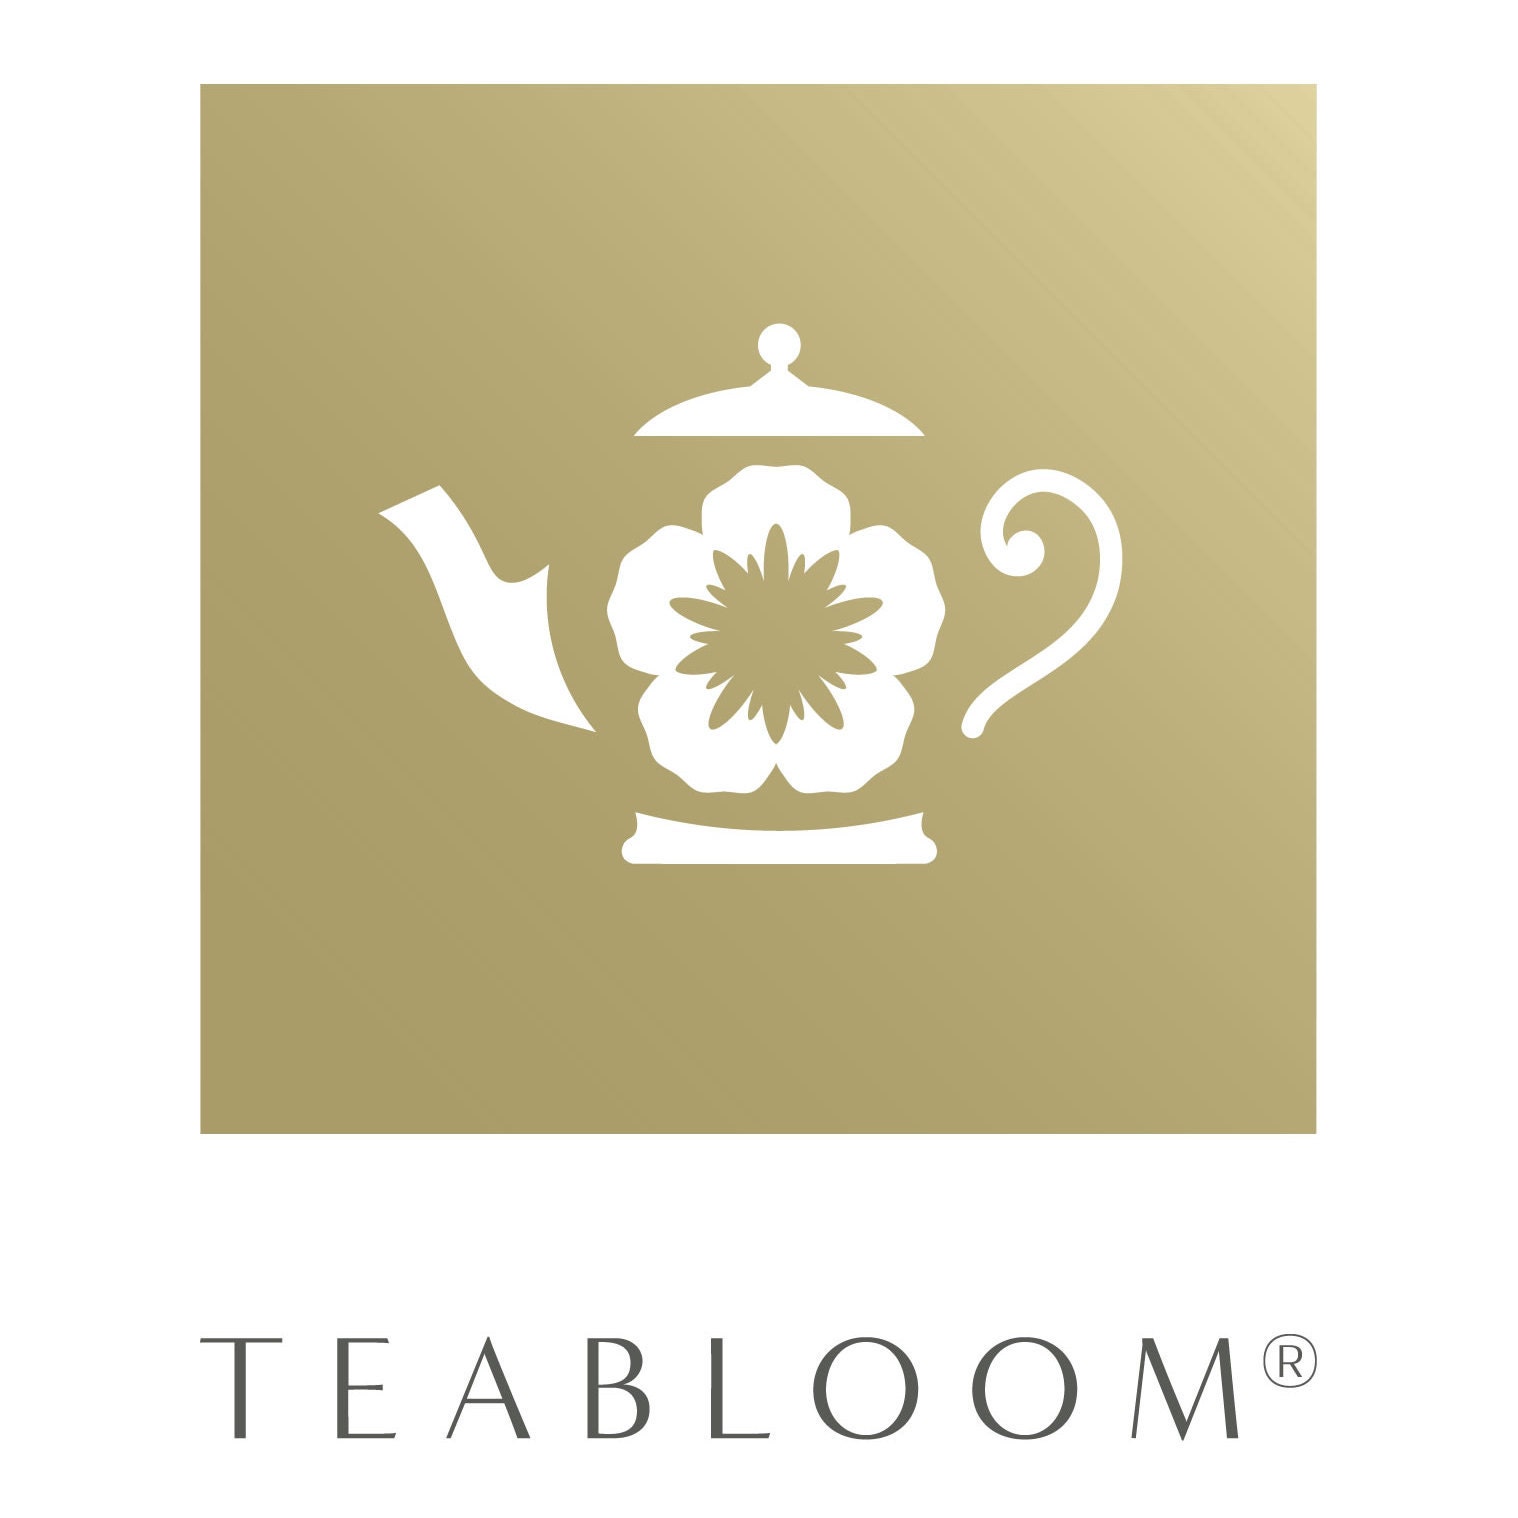 Teabloom Eternal Love Teapot – Glass Teapot (36 oz), Heart-Topped Lid,  Glass Loose Leaf Tea Infuser + 2 Gourmet Blooming Teas - Thermal Shock